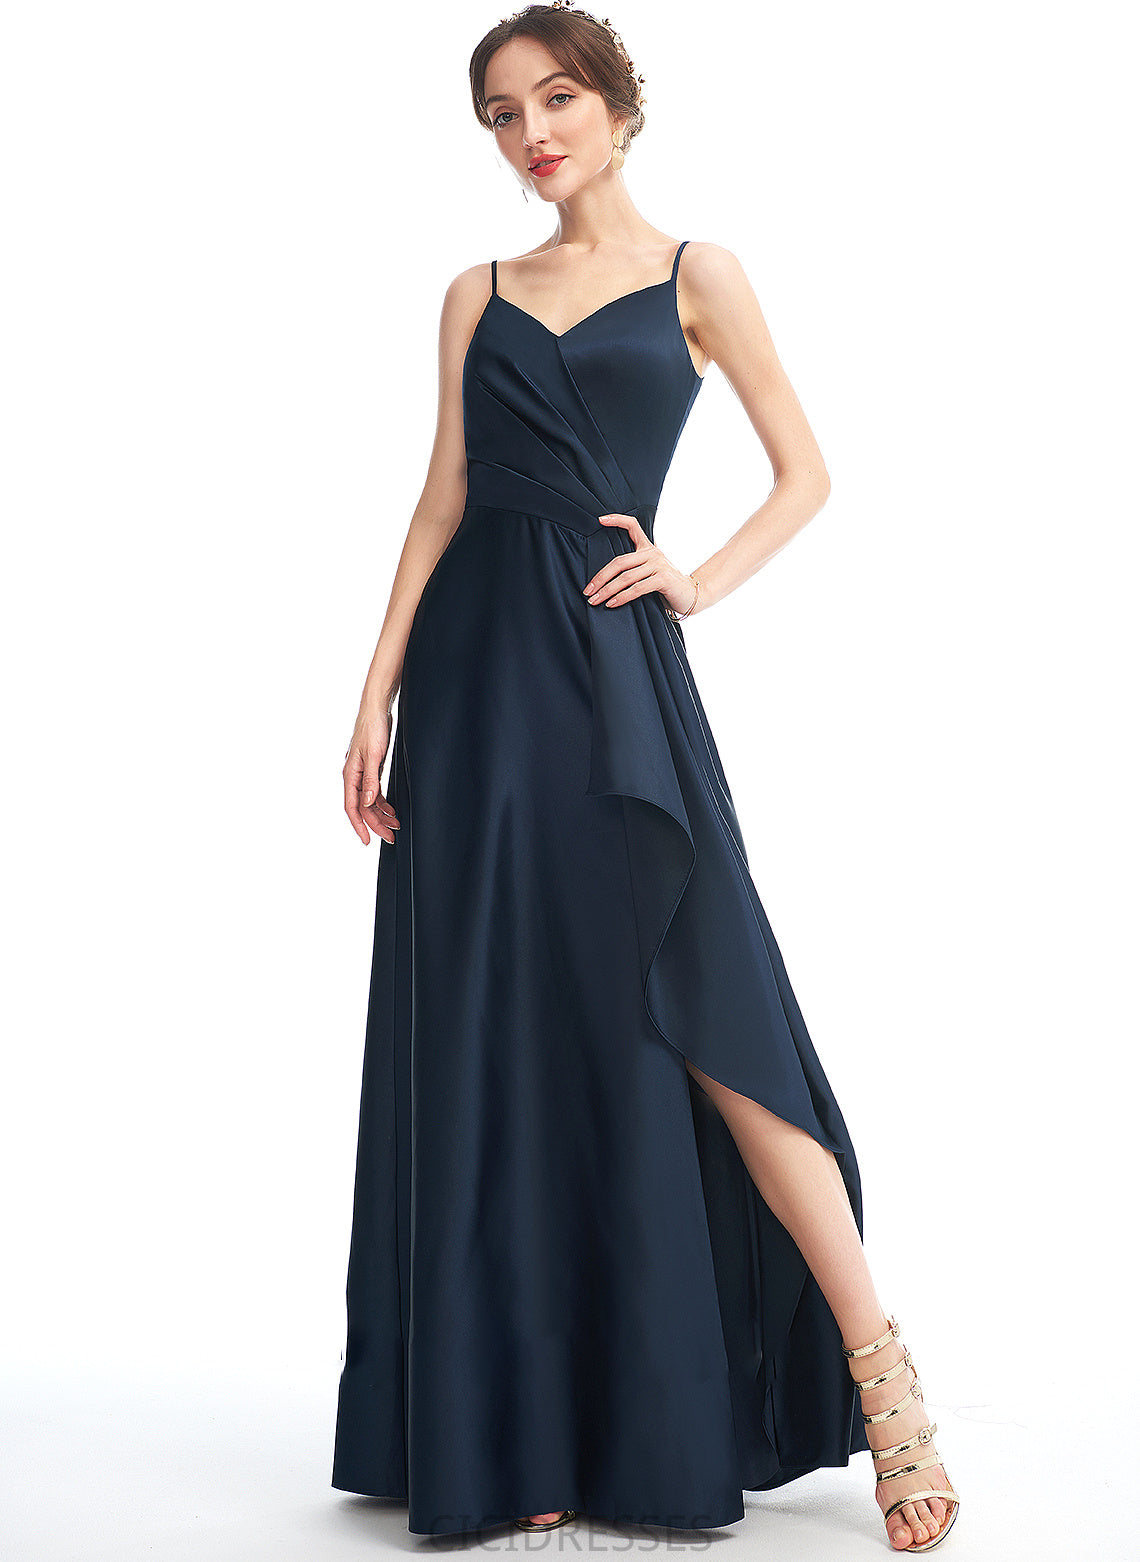 Silhouette Floor-Length Length Neckline SplitFront A-Line Fabric V-neck Pockets Embellishment Mckinley Natural Waist Bridesmaid Dresses